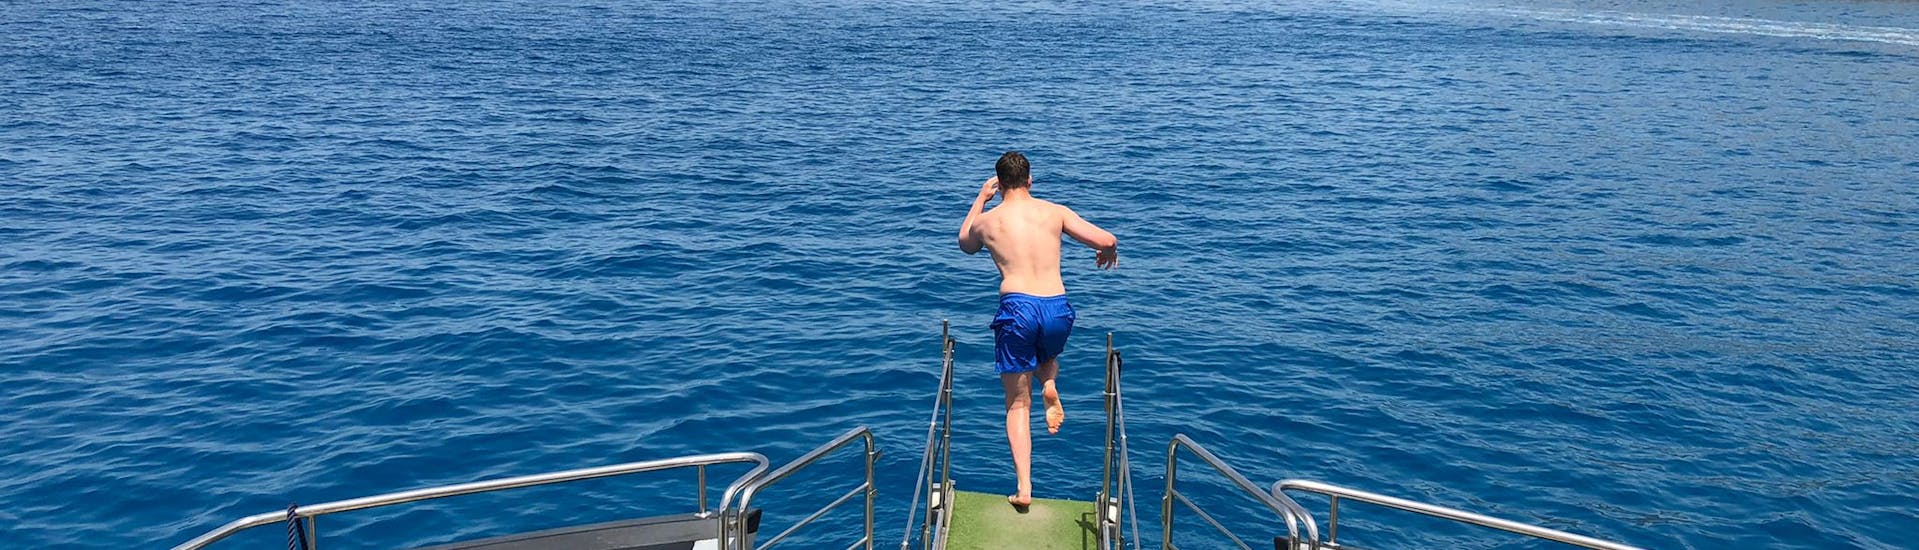 Un hombre saltando al agua durante la excursión en catamarán por Ibiza con actividades acuáticas con Sea Experience Ibiza.